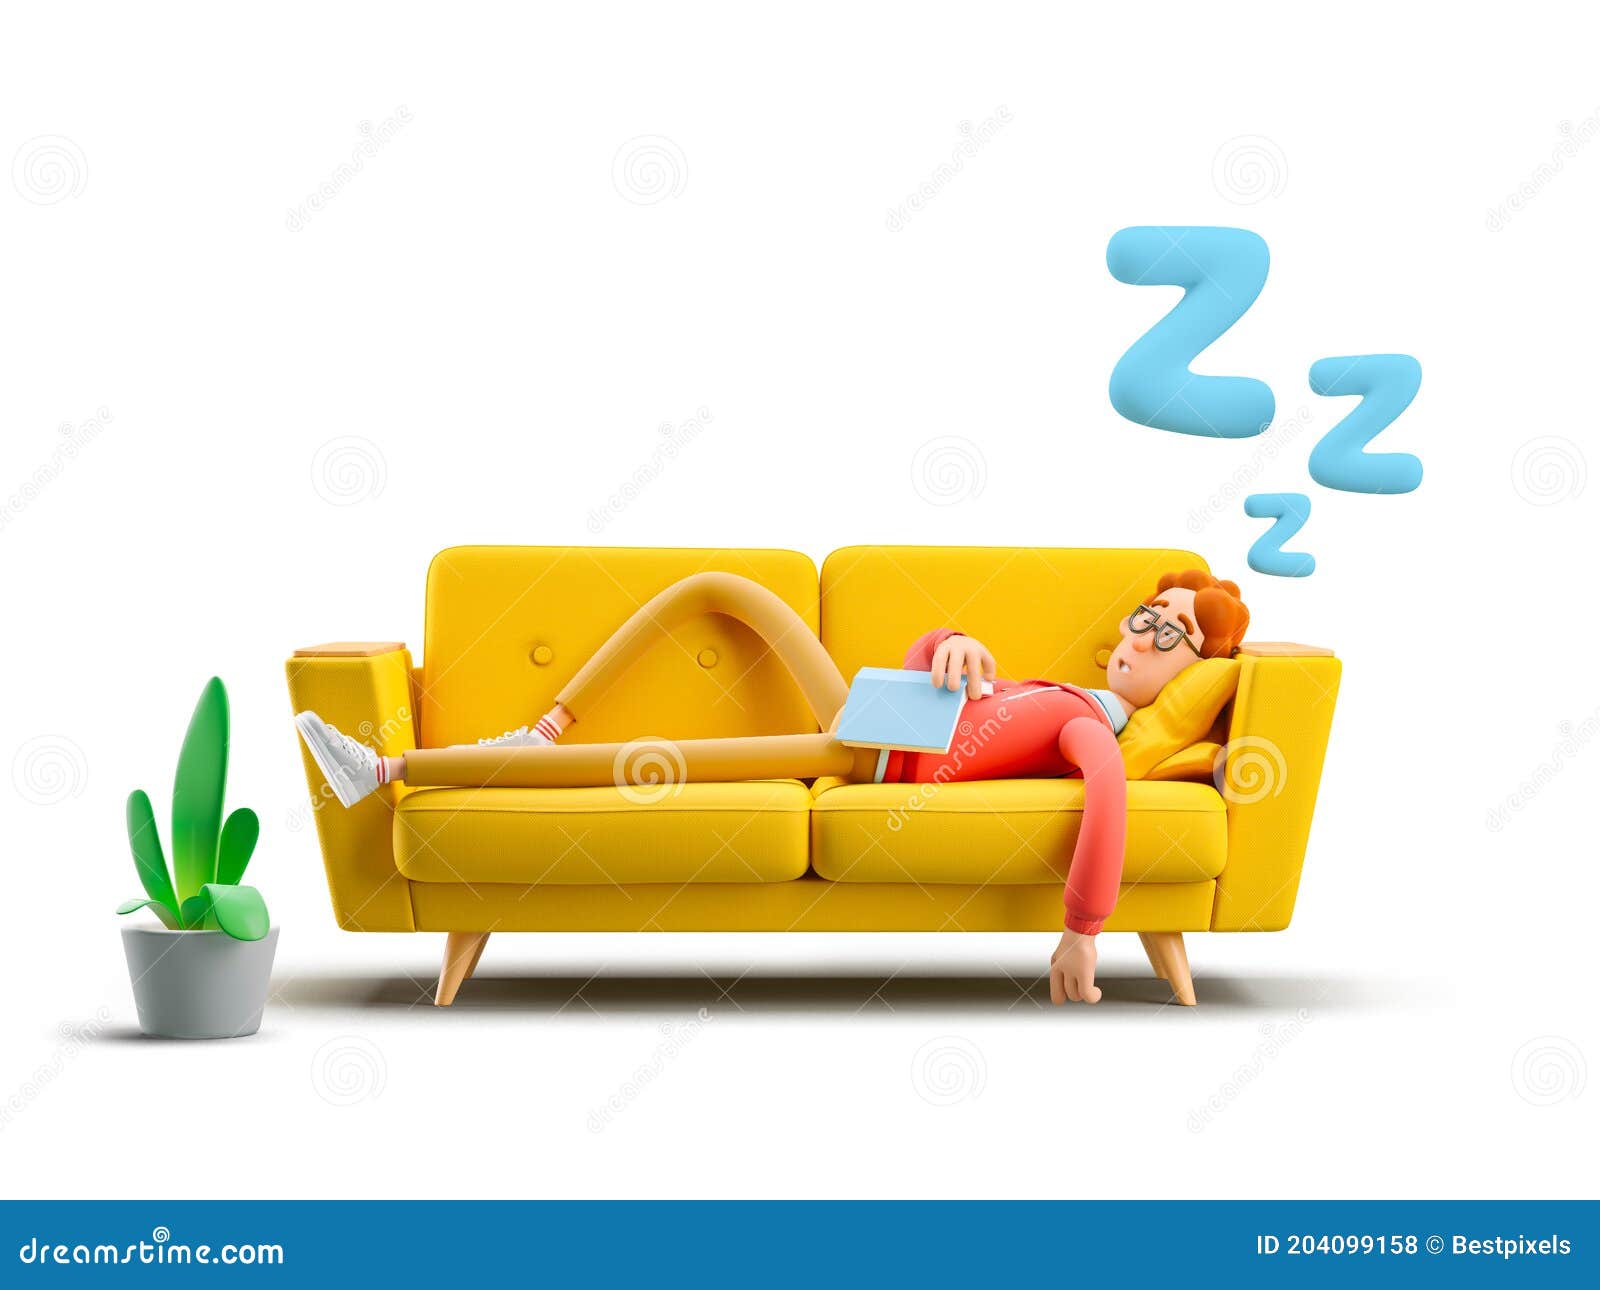 3d . nerd larry sleeping on a yellow sofa.